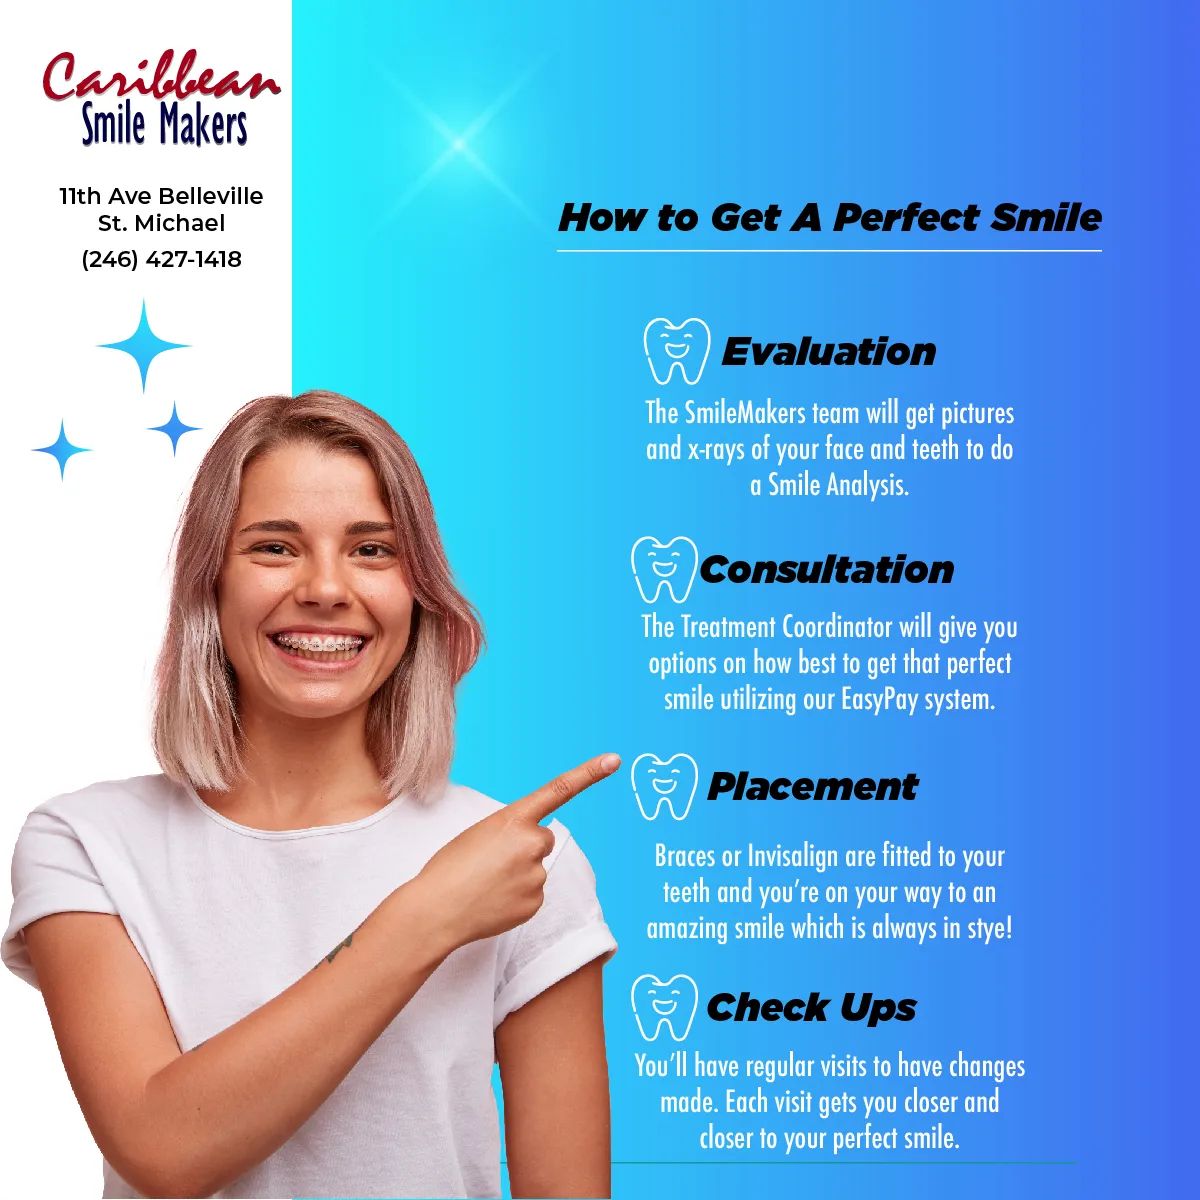 Caribbean Smile Makers - Dentists-Orthodontics (Straightening)